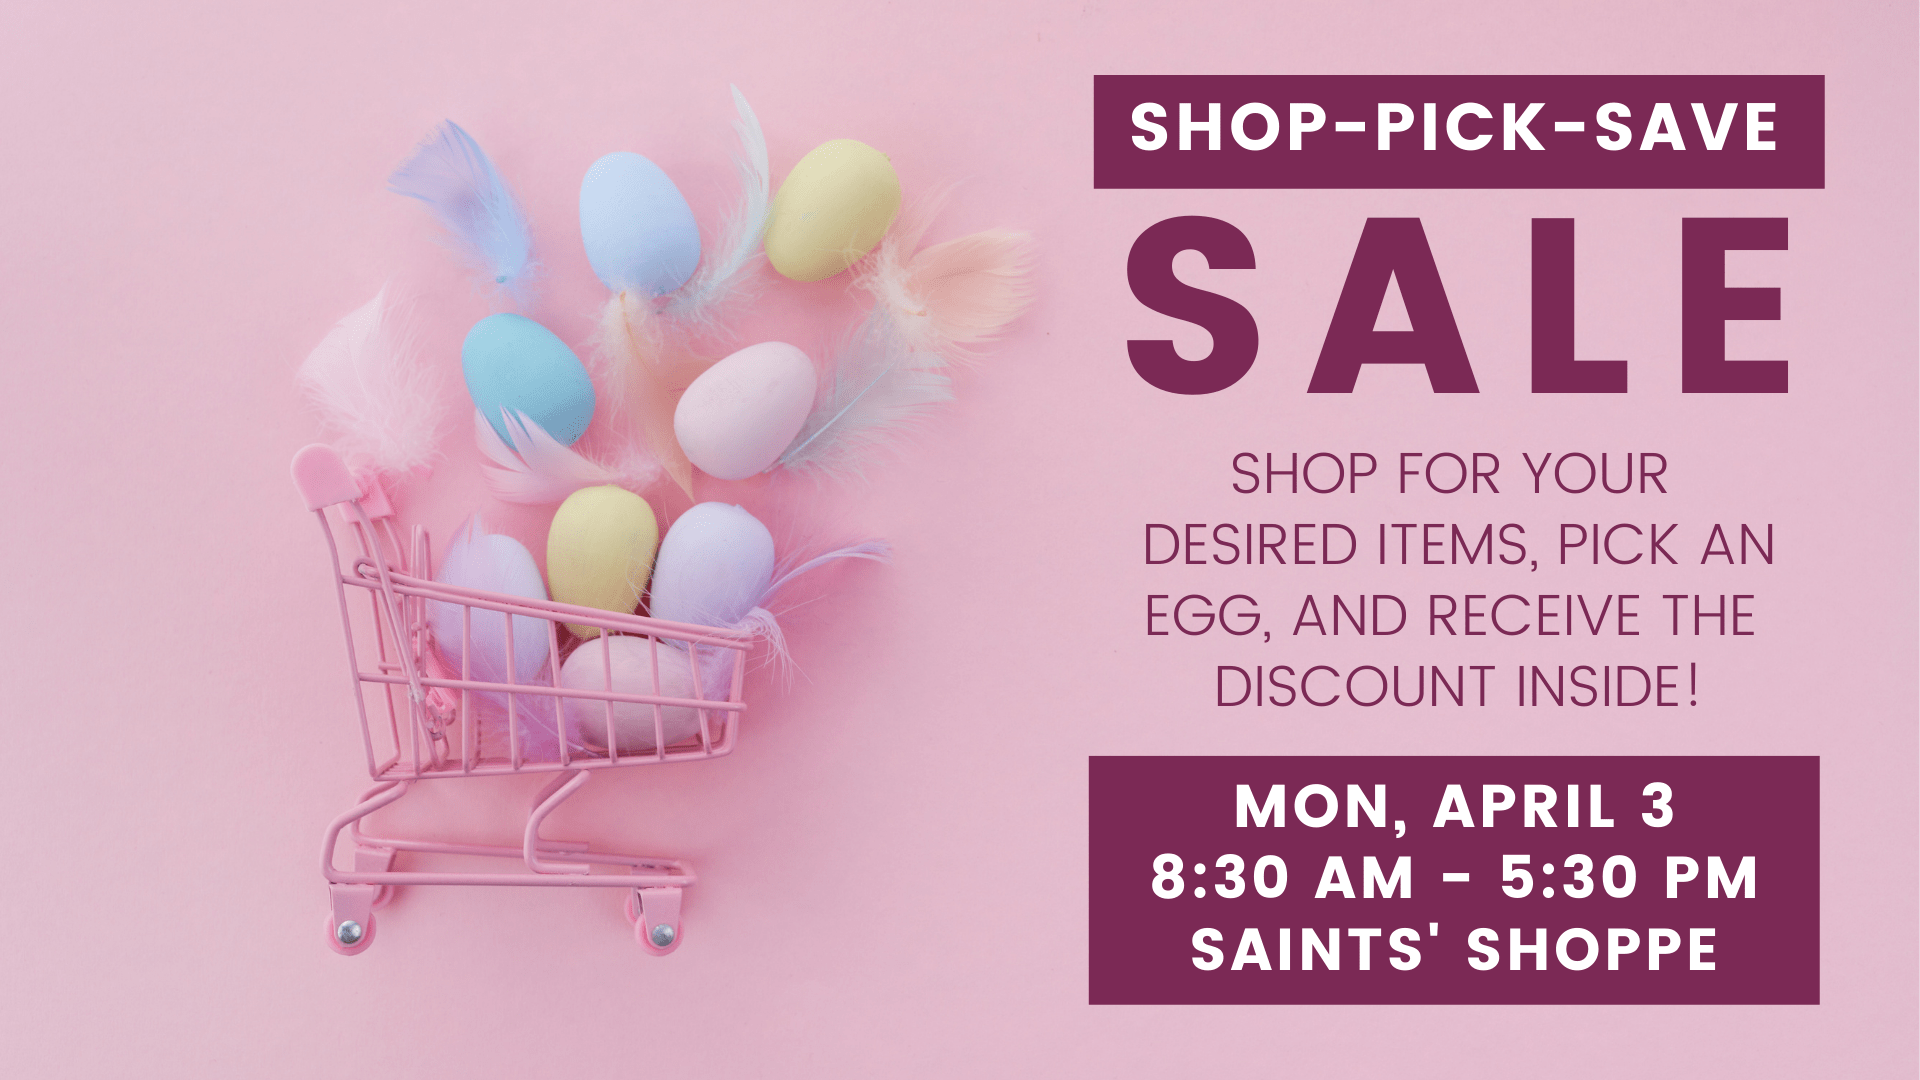 Shop-pick-save sale